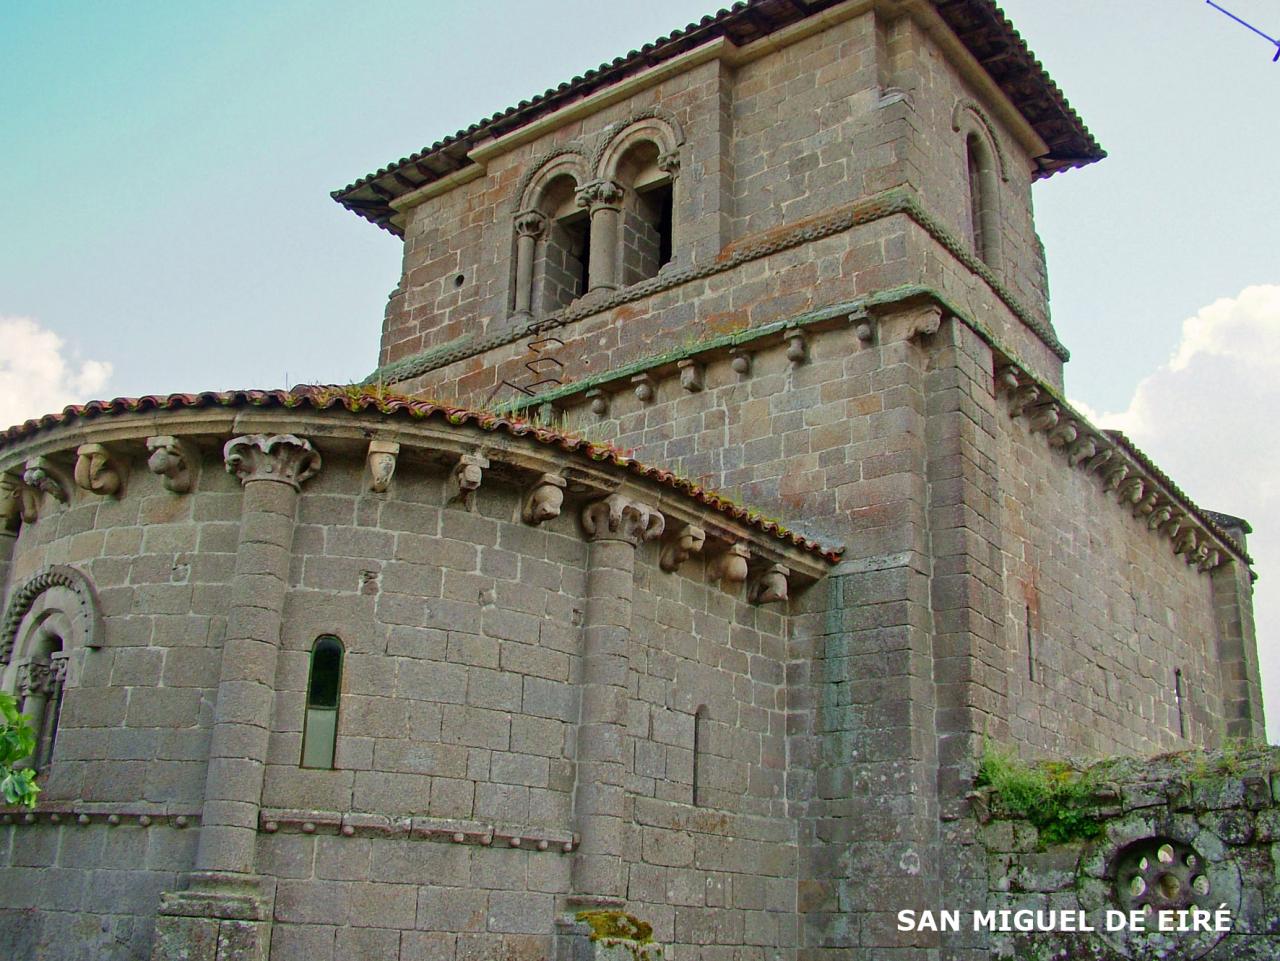 San Miguel de Eire